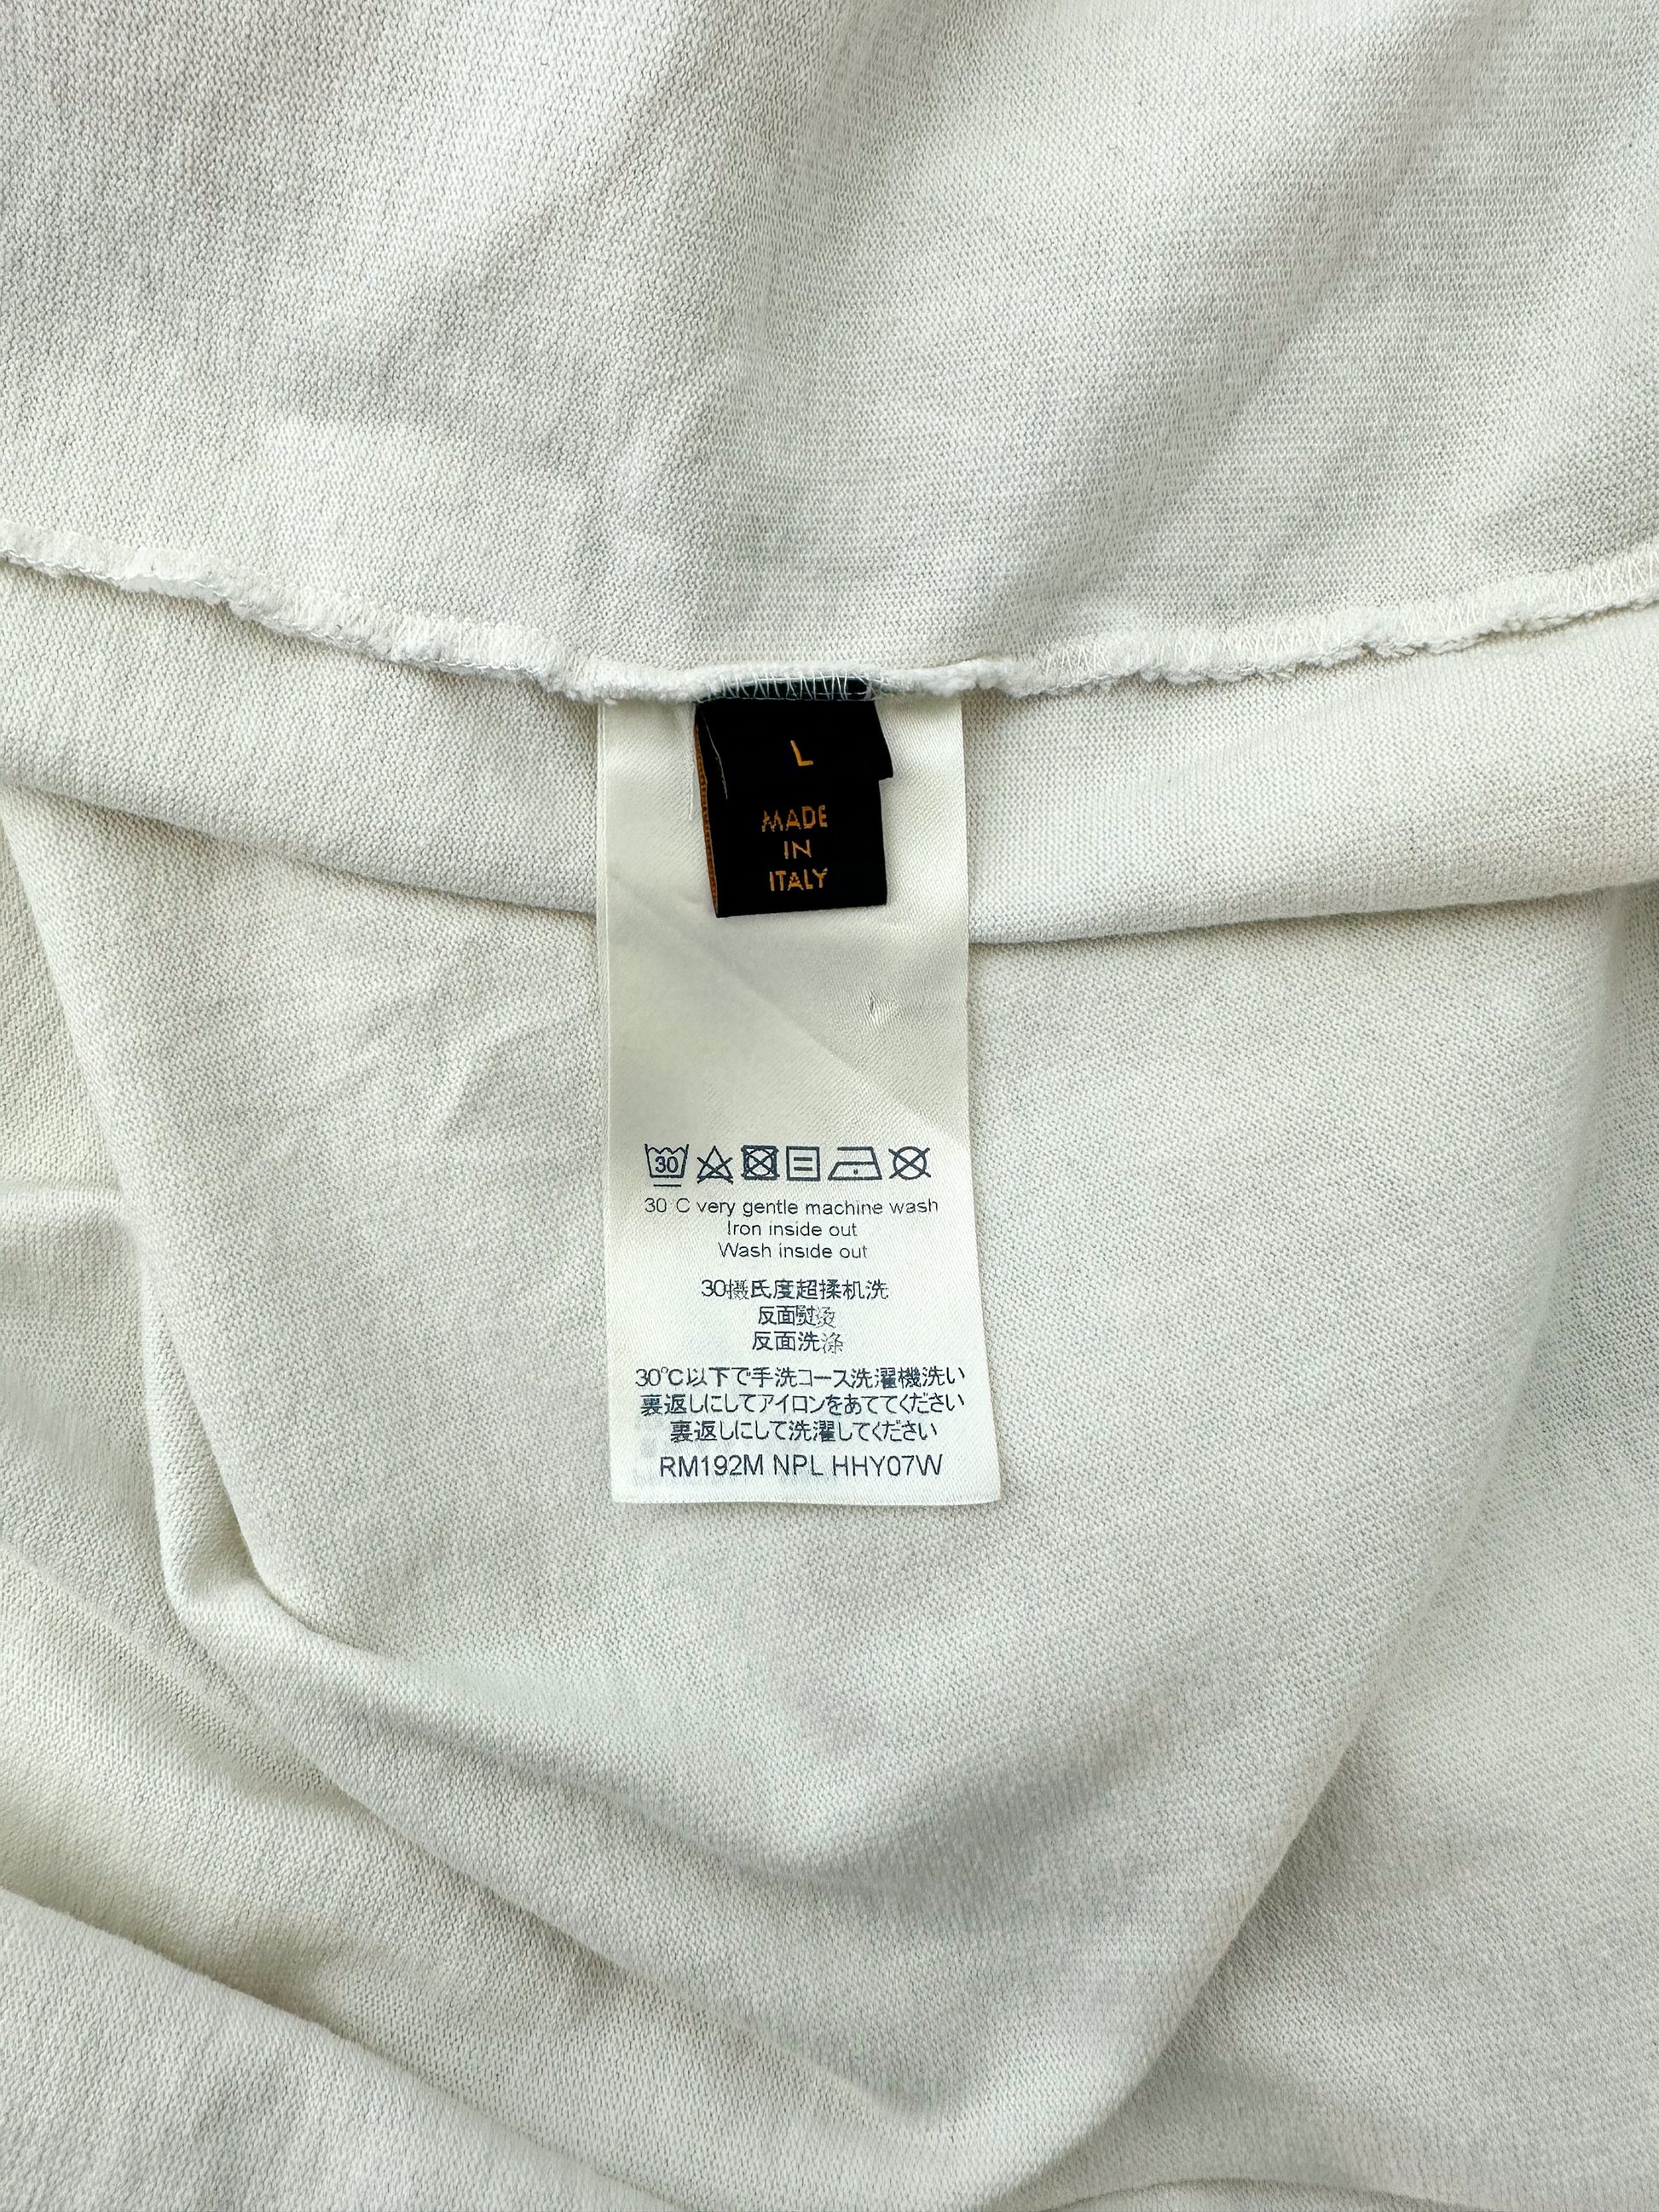 Louis Vuitton White Barcode Logo Tee – Savonches